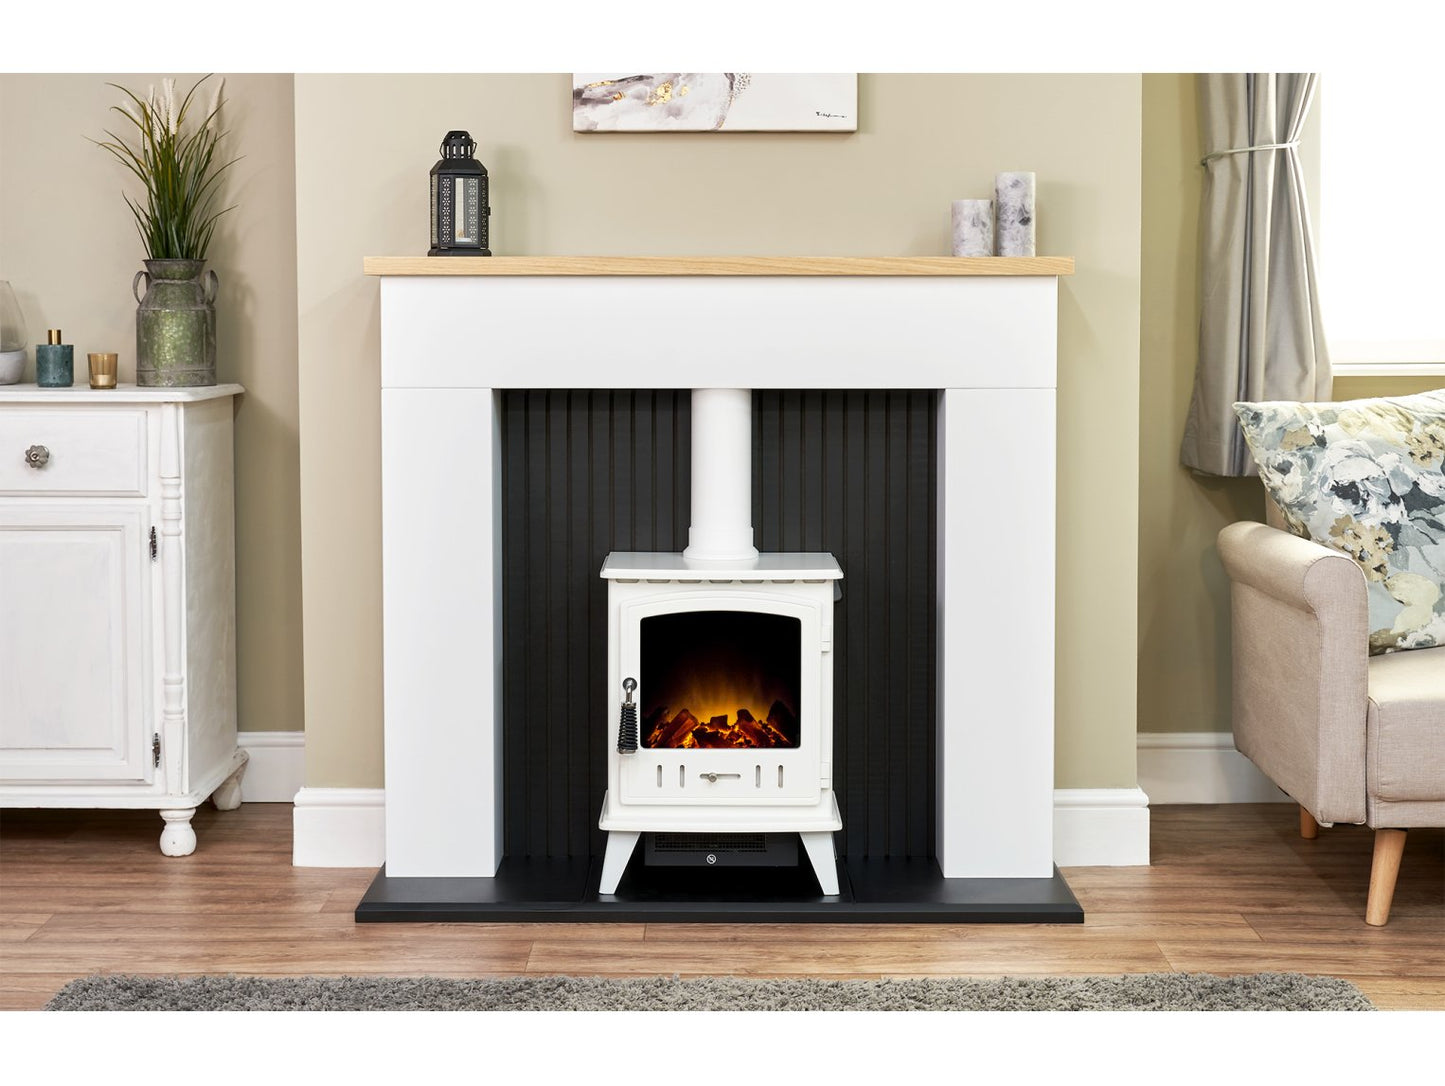 Adam Innsbruck Stove Fireplace Pure White + Aviemore Electric Stove White Enamel, 48"